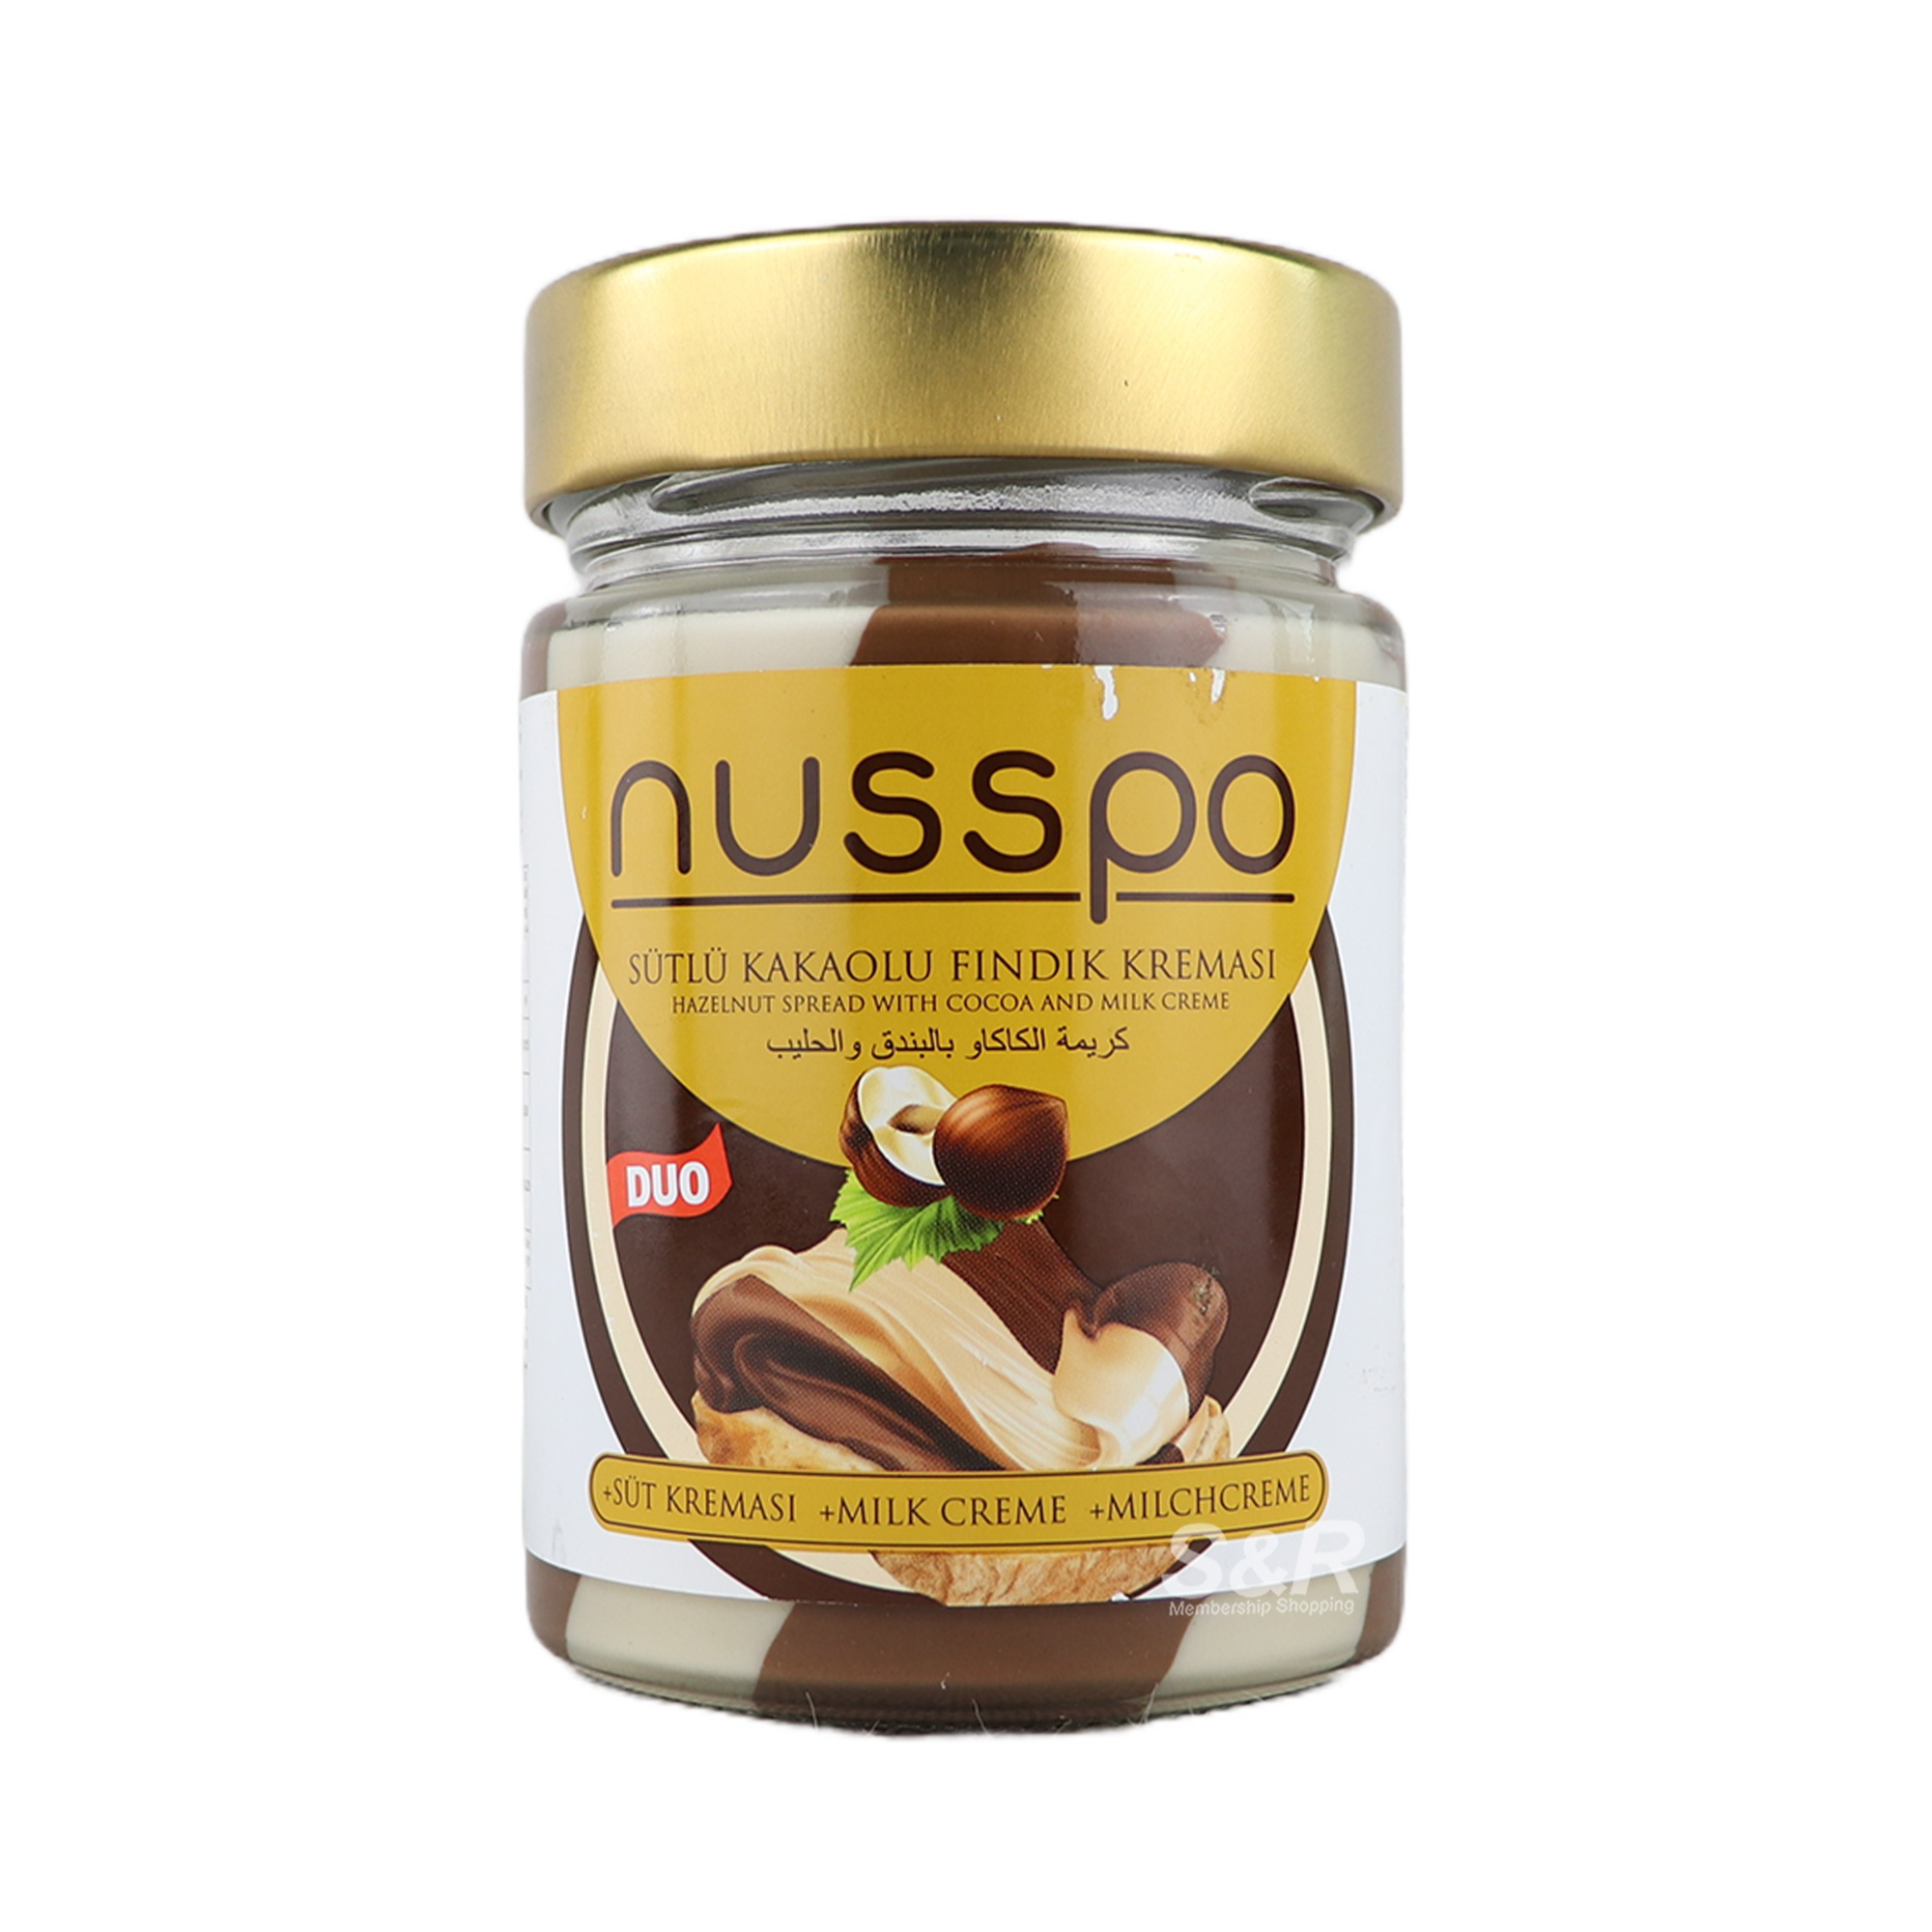 Nusspo Cocoa And Milk Creme Hazelnut Spread 350g